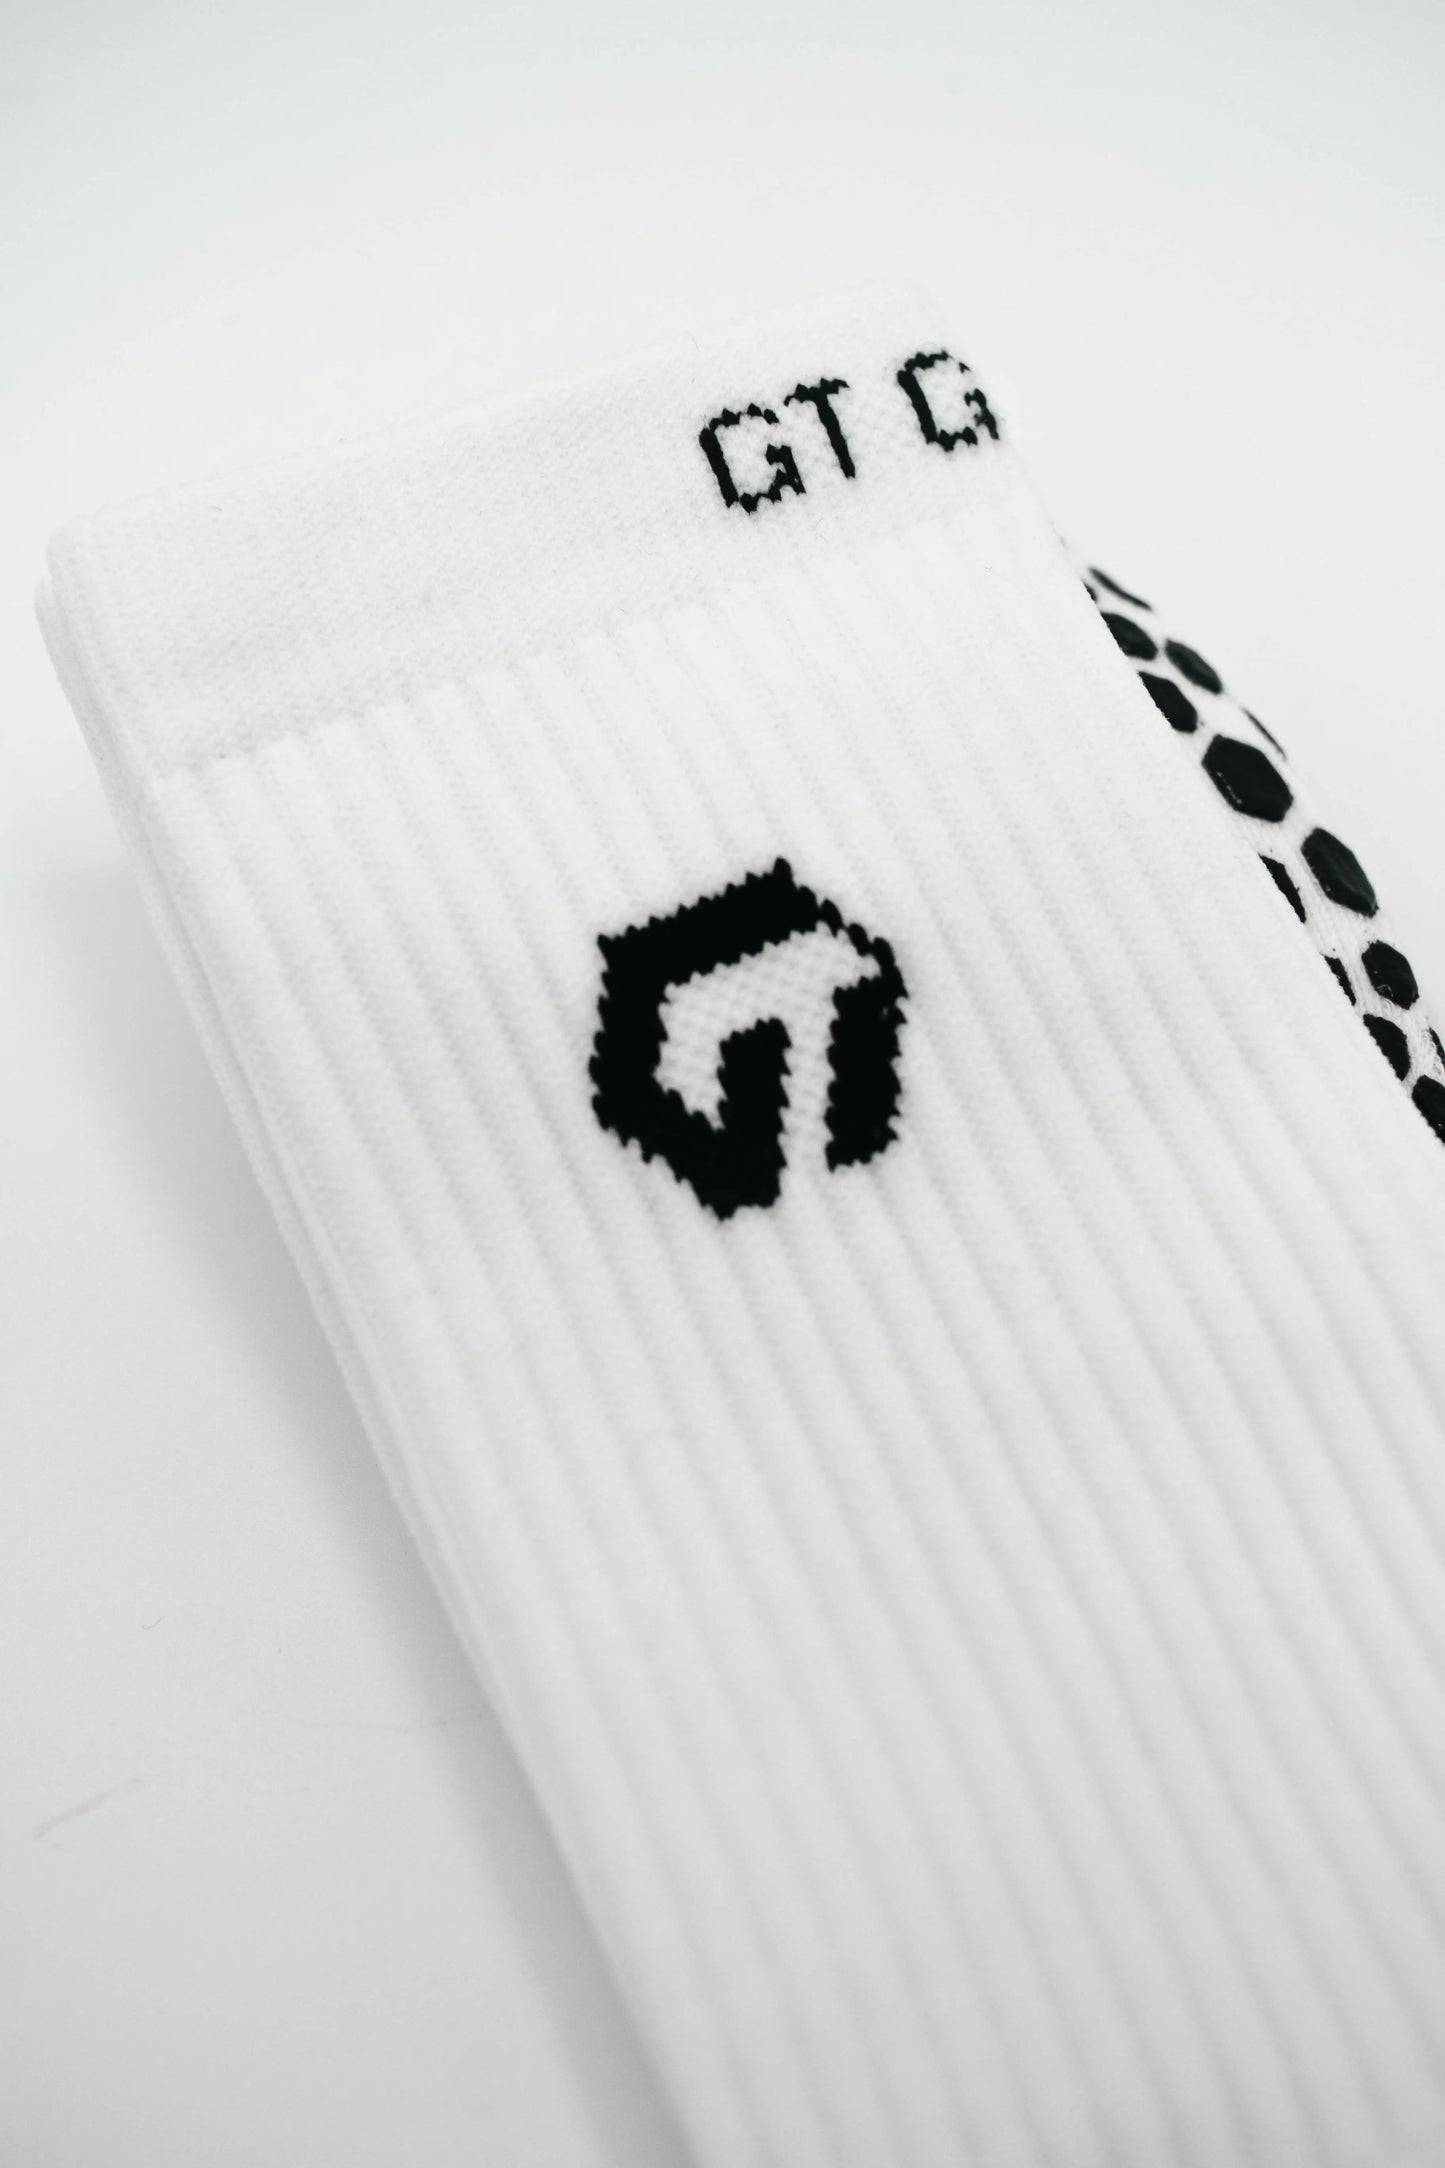 GT GRIP Socks - The Grip Socks Your Feet Deserve